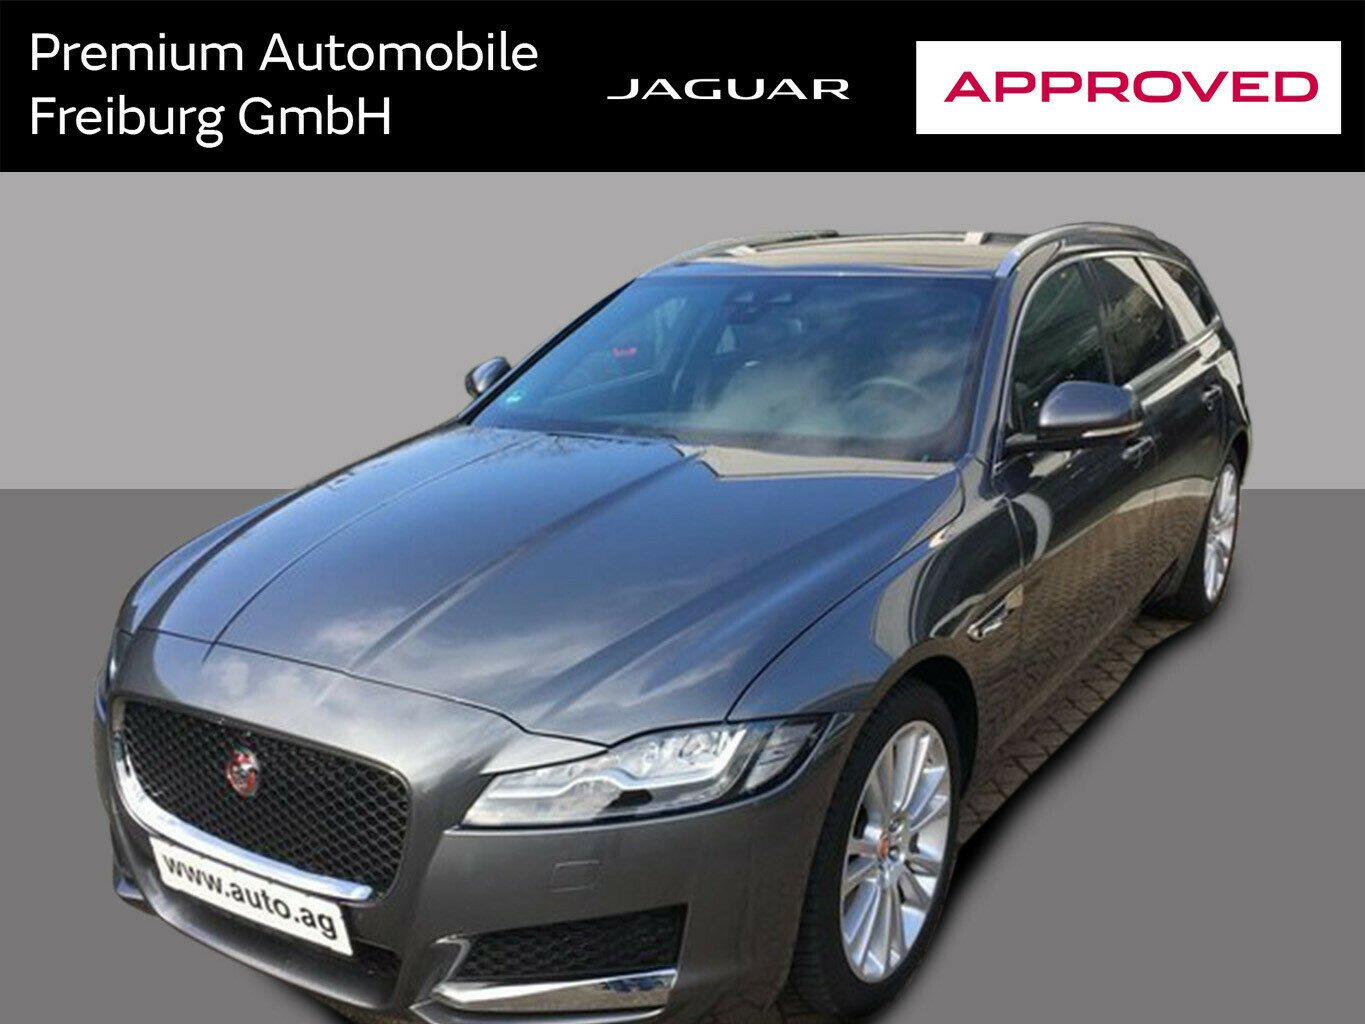 Jaguar XF SPORTBRAKE 25D AWD PORTFOLIO APPROVED